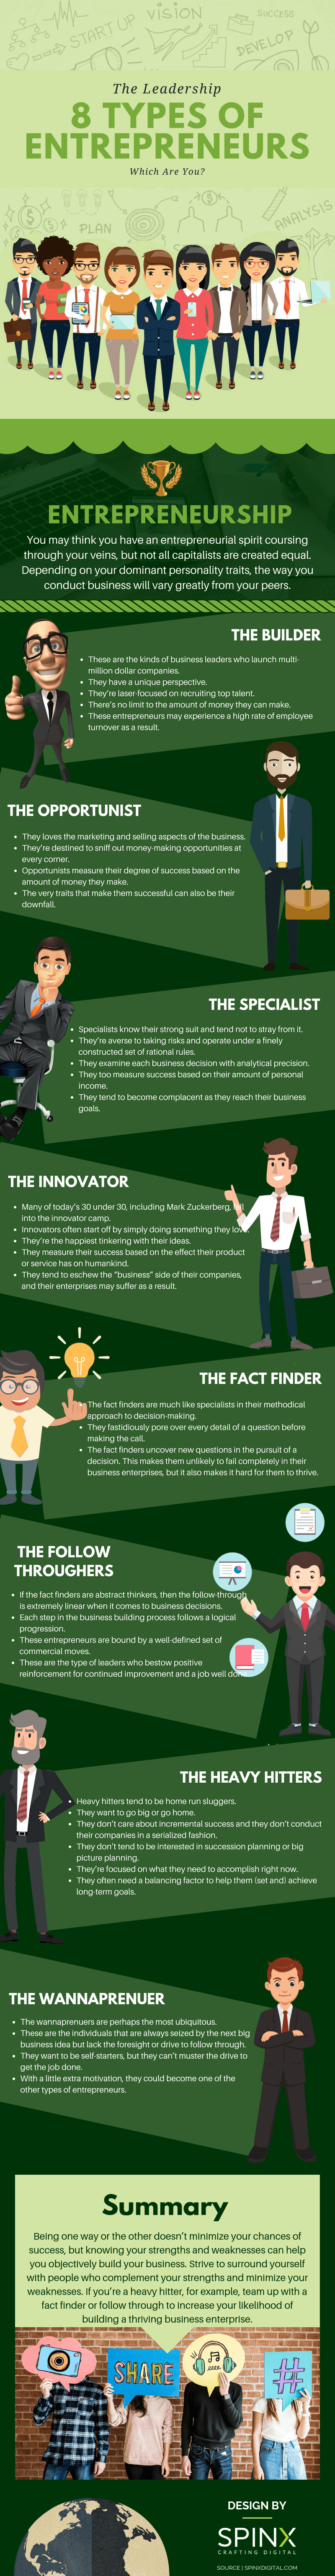 8 types of entrepreneurs infographic